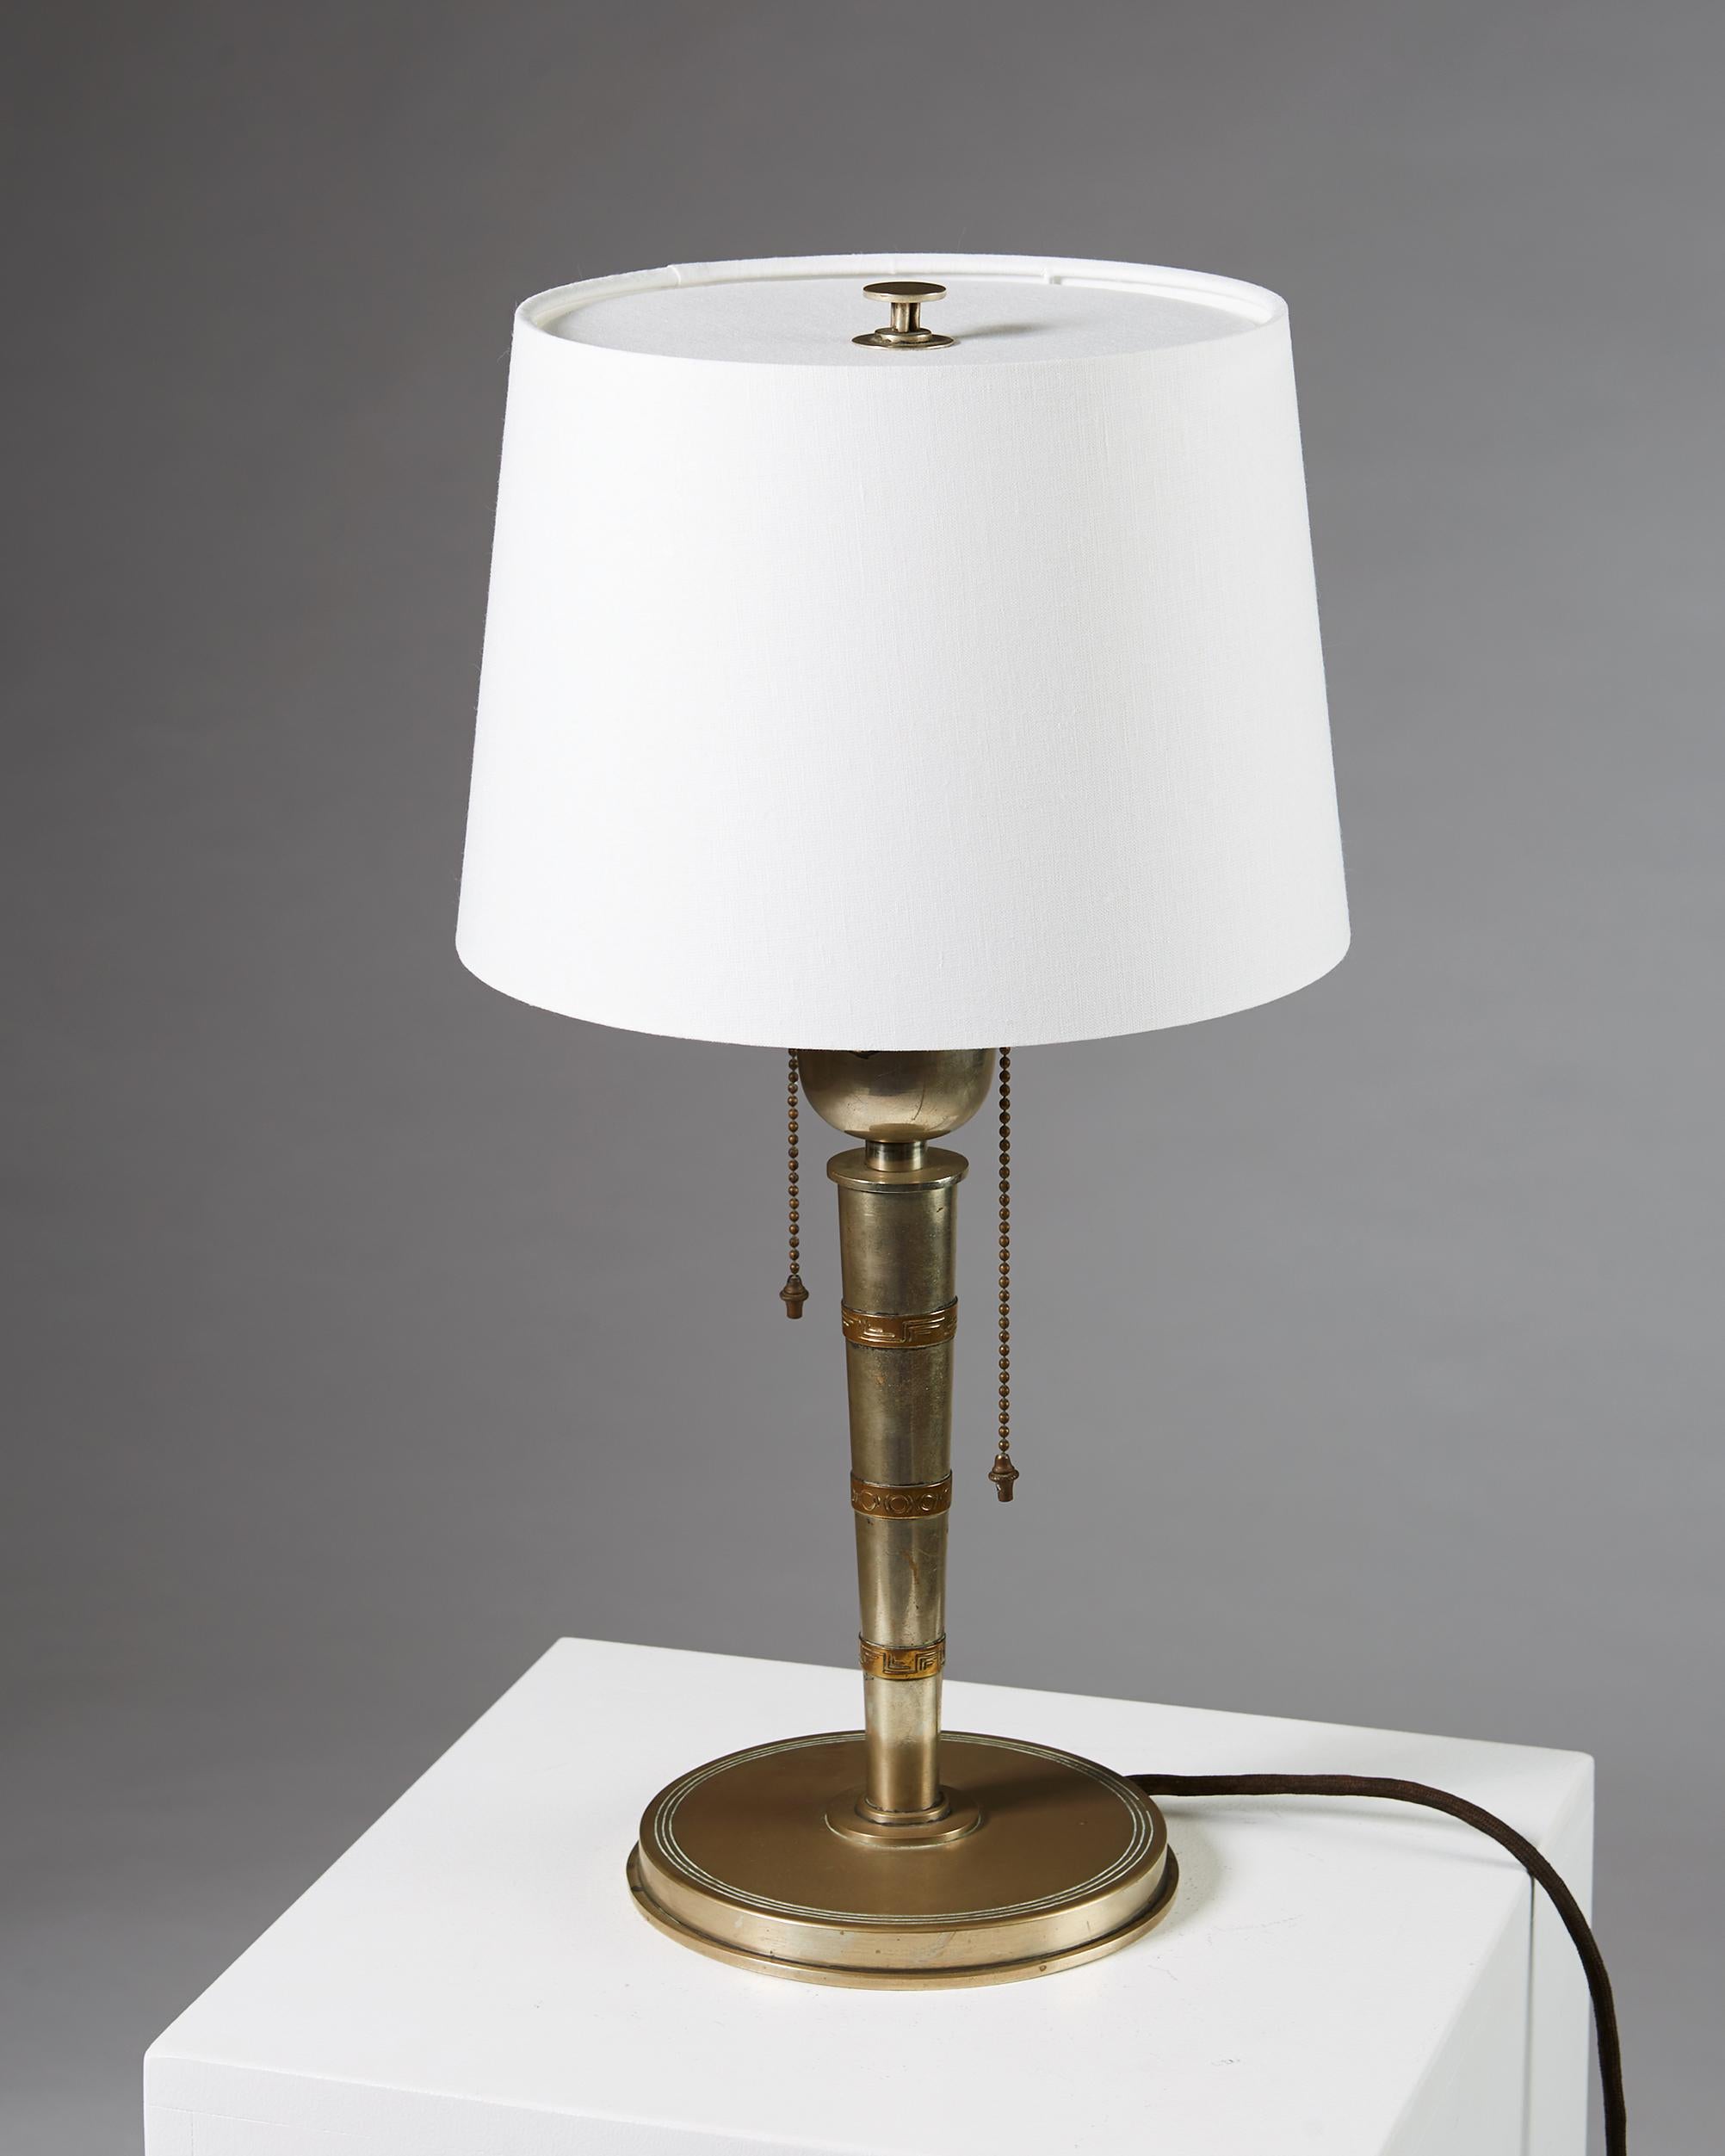 Scandinavian Modern Table Lamp Designed by Tore Kullander, Pewter and Brass, Sweden, 1930s For Sale